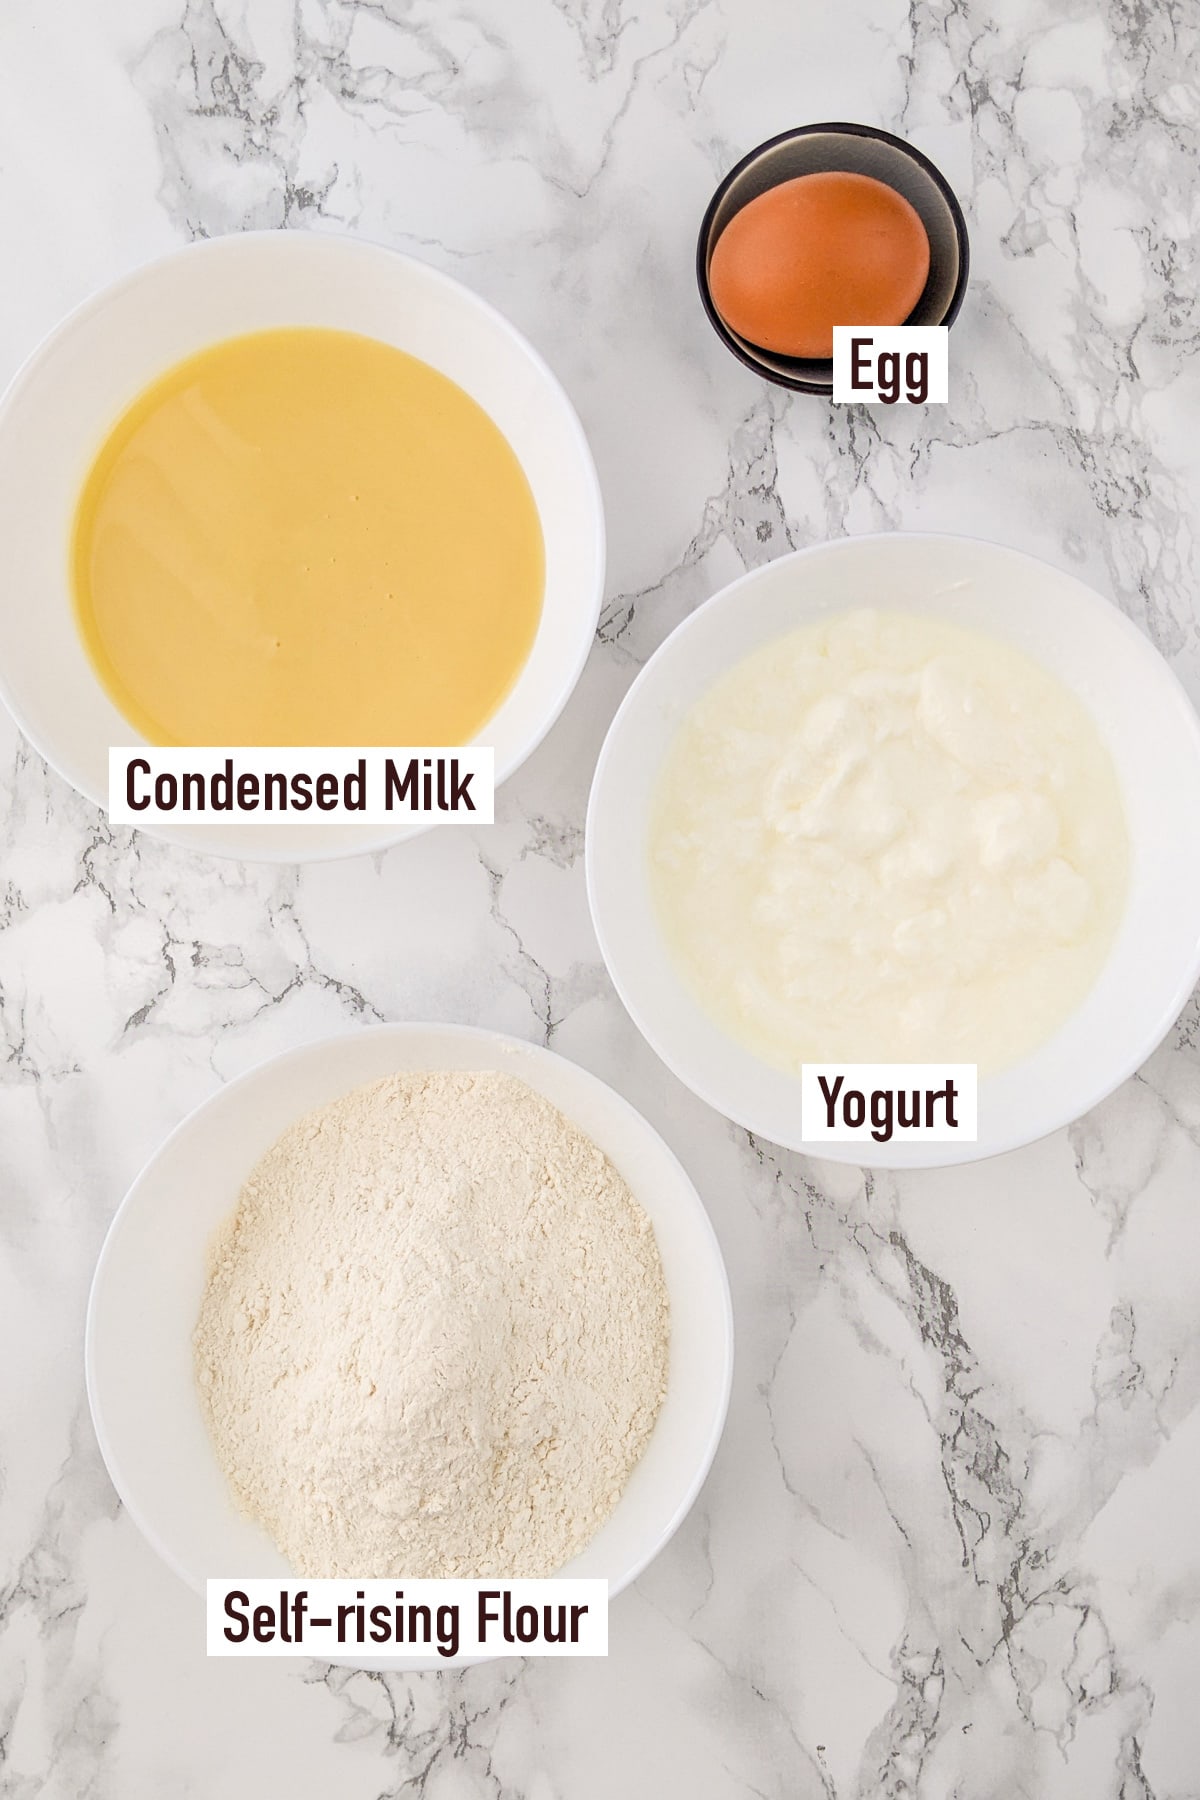 Top view of yogurt, self-rising flour, condensed milk and an egg.